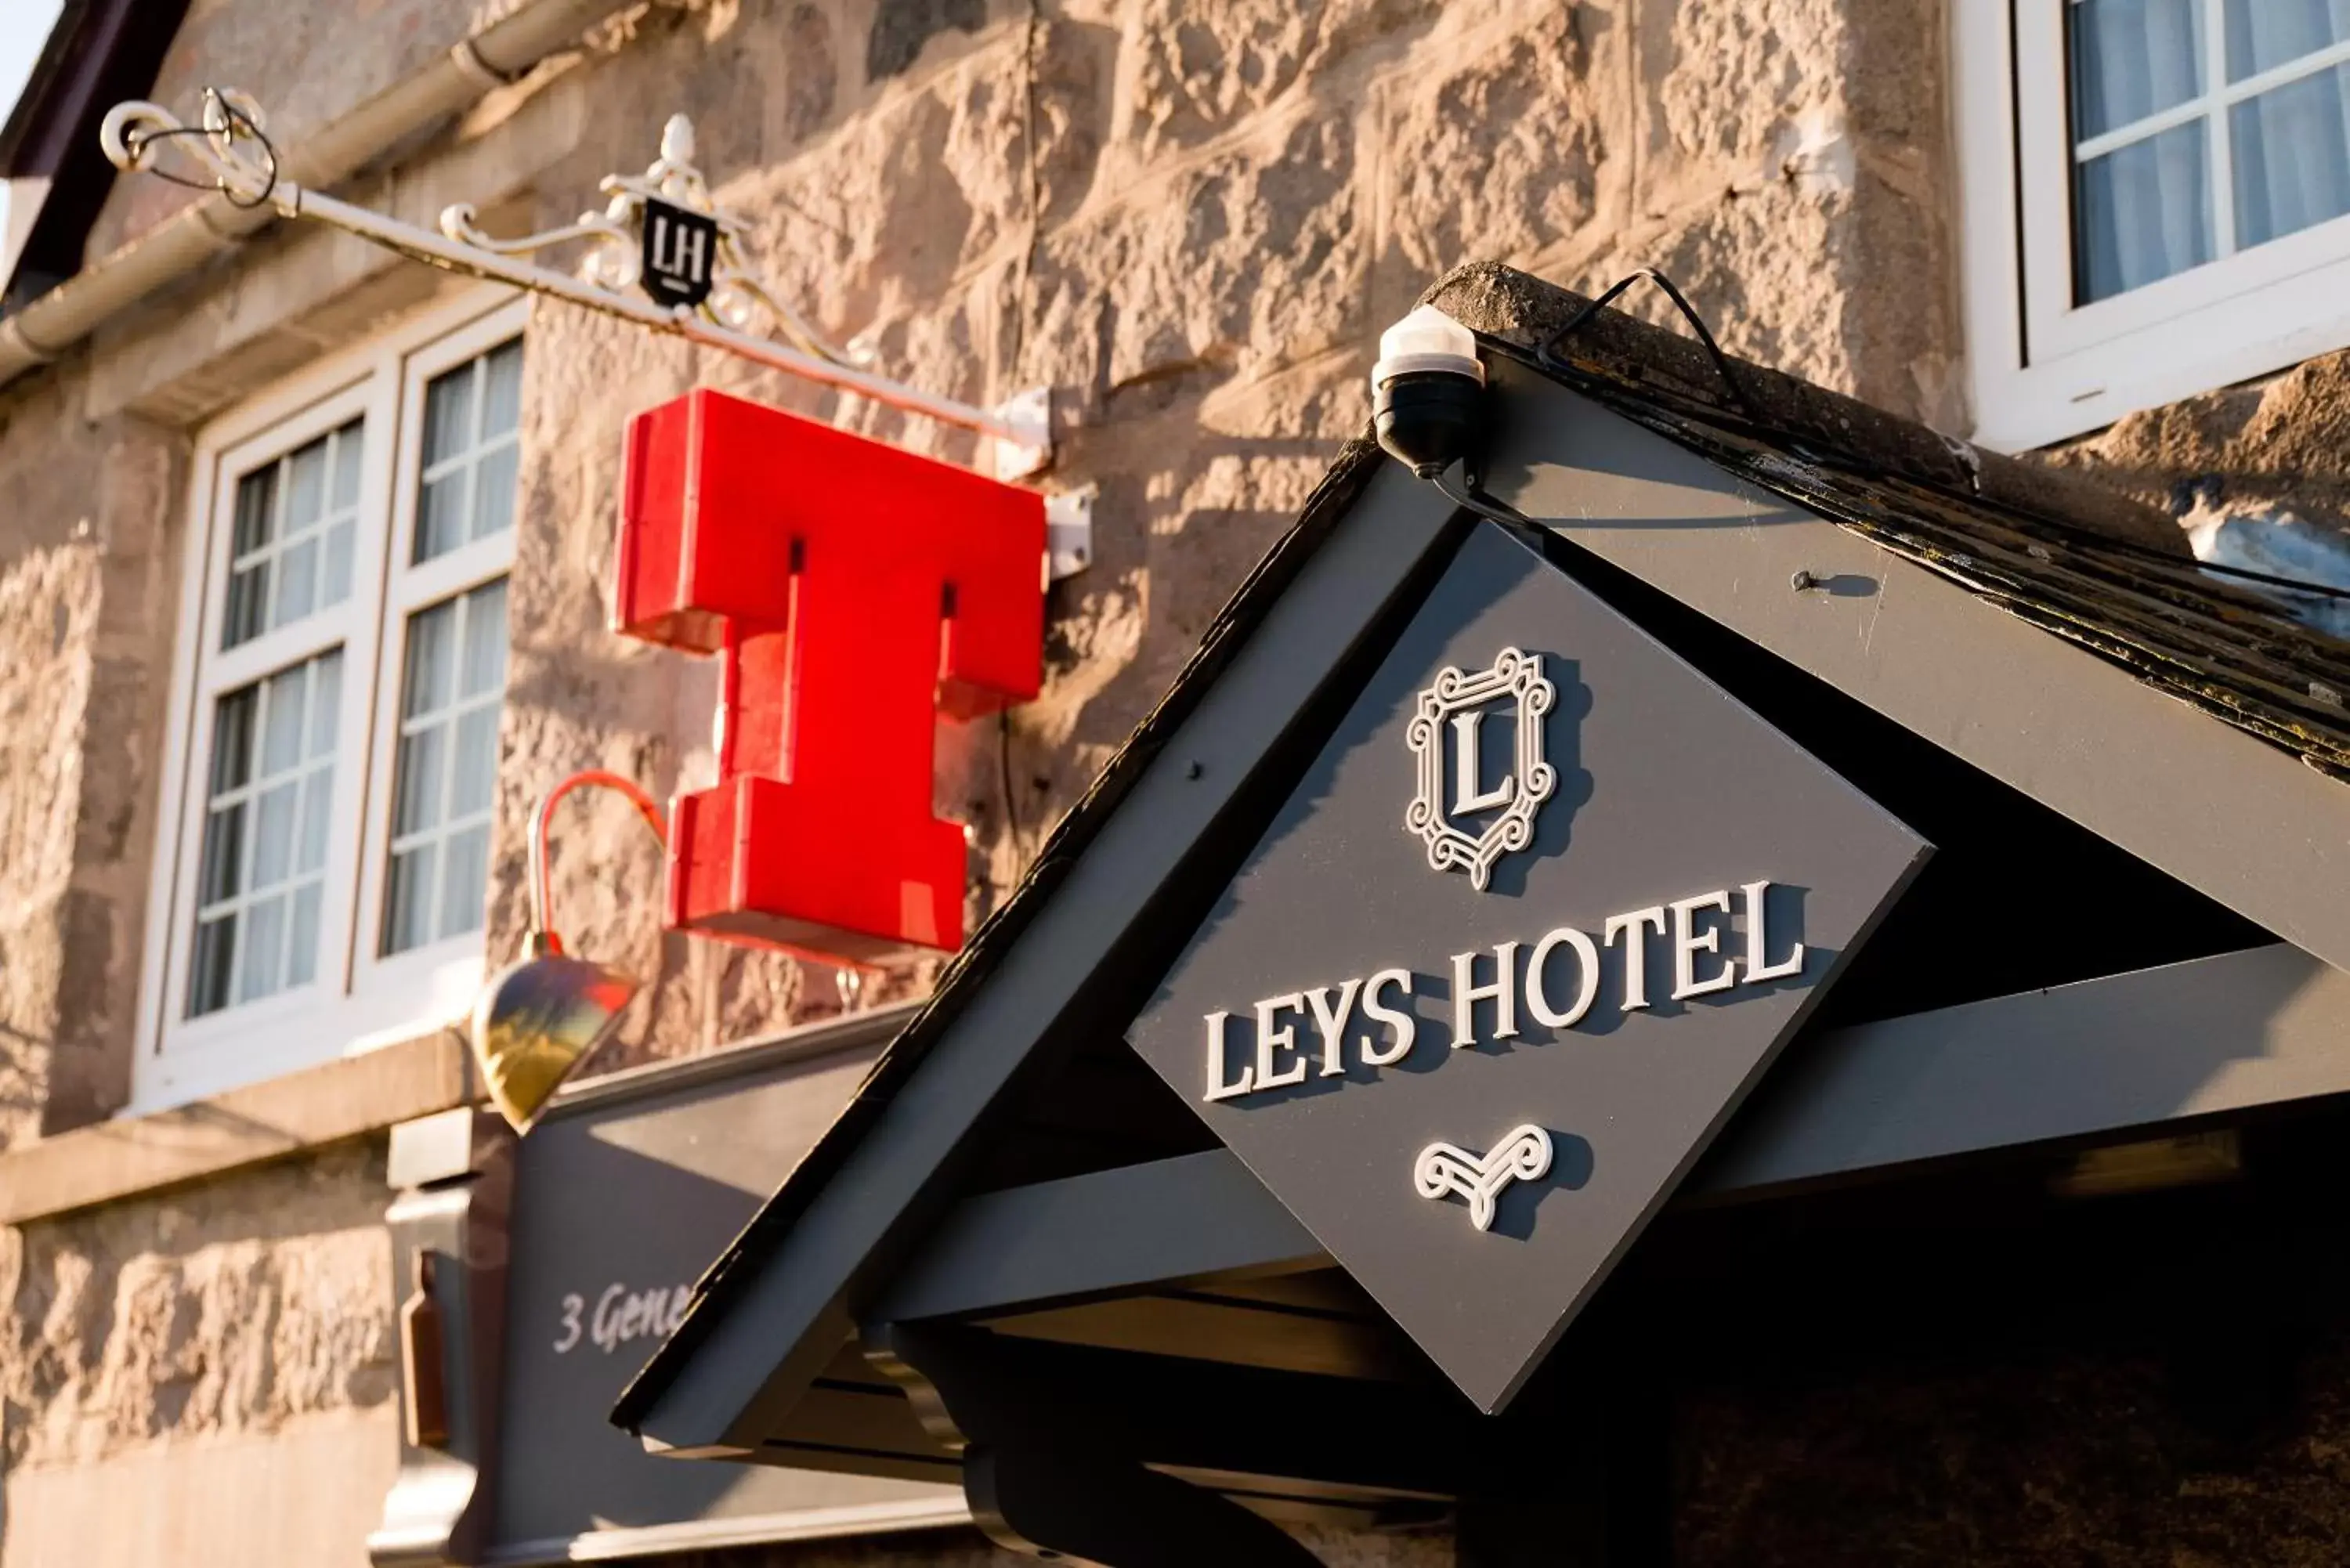 Property logo or sign in Leys Hotel